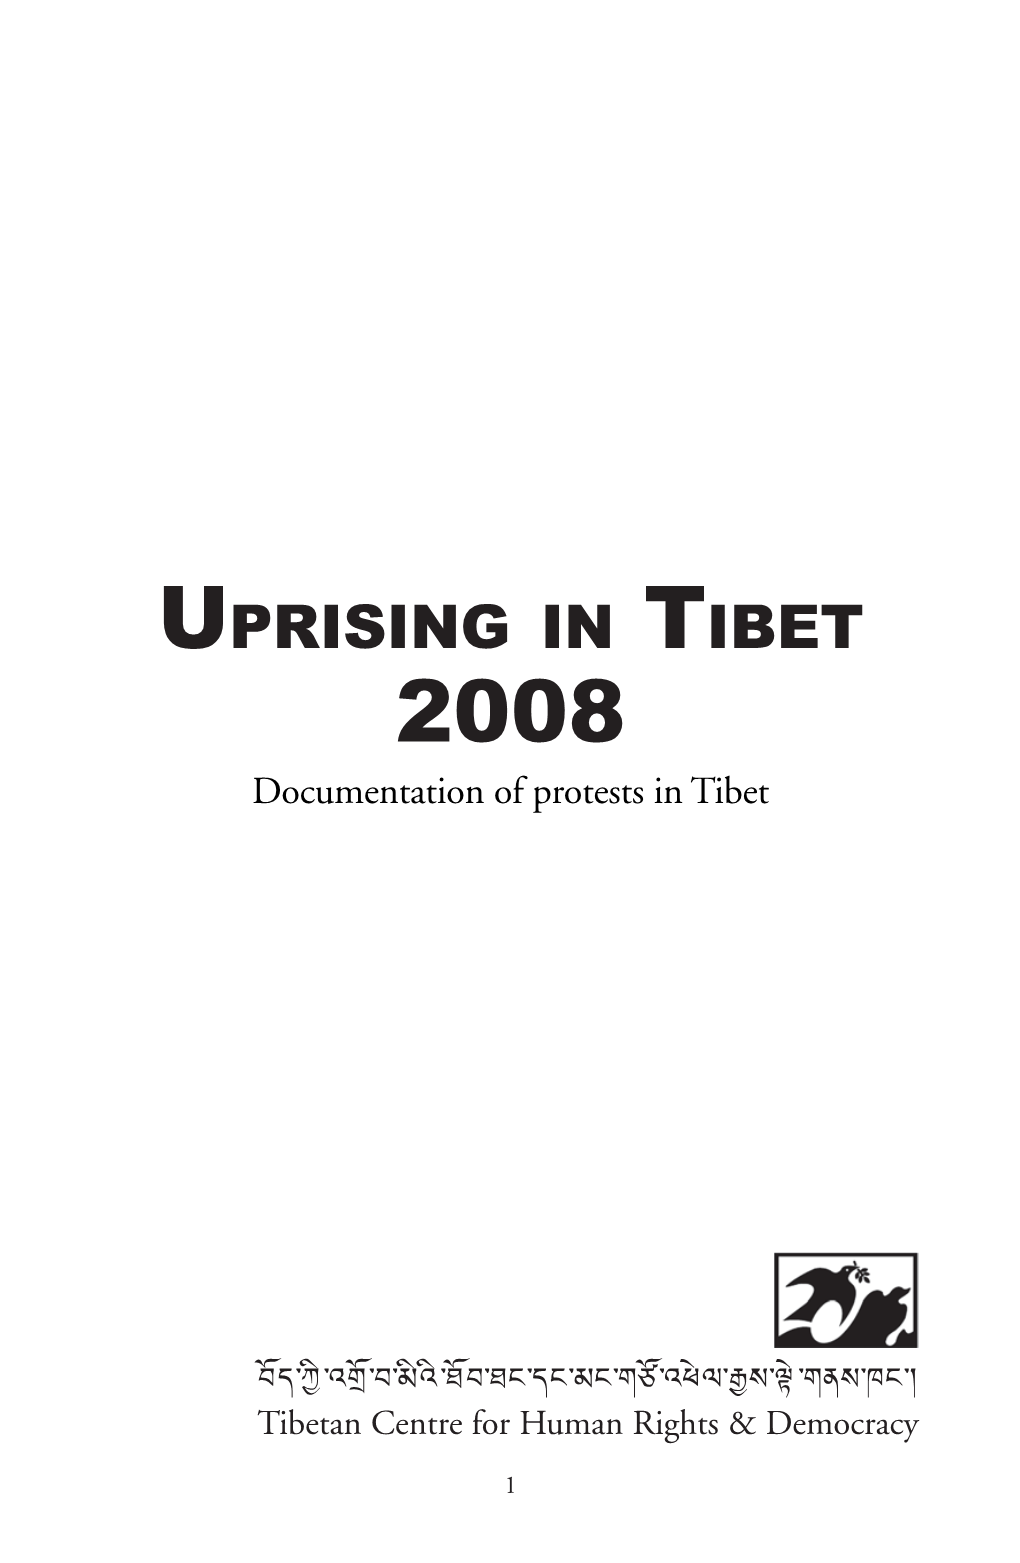 UPRISING in TIBET 2008 Documentation of Protests in Tibet